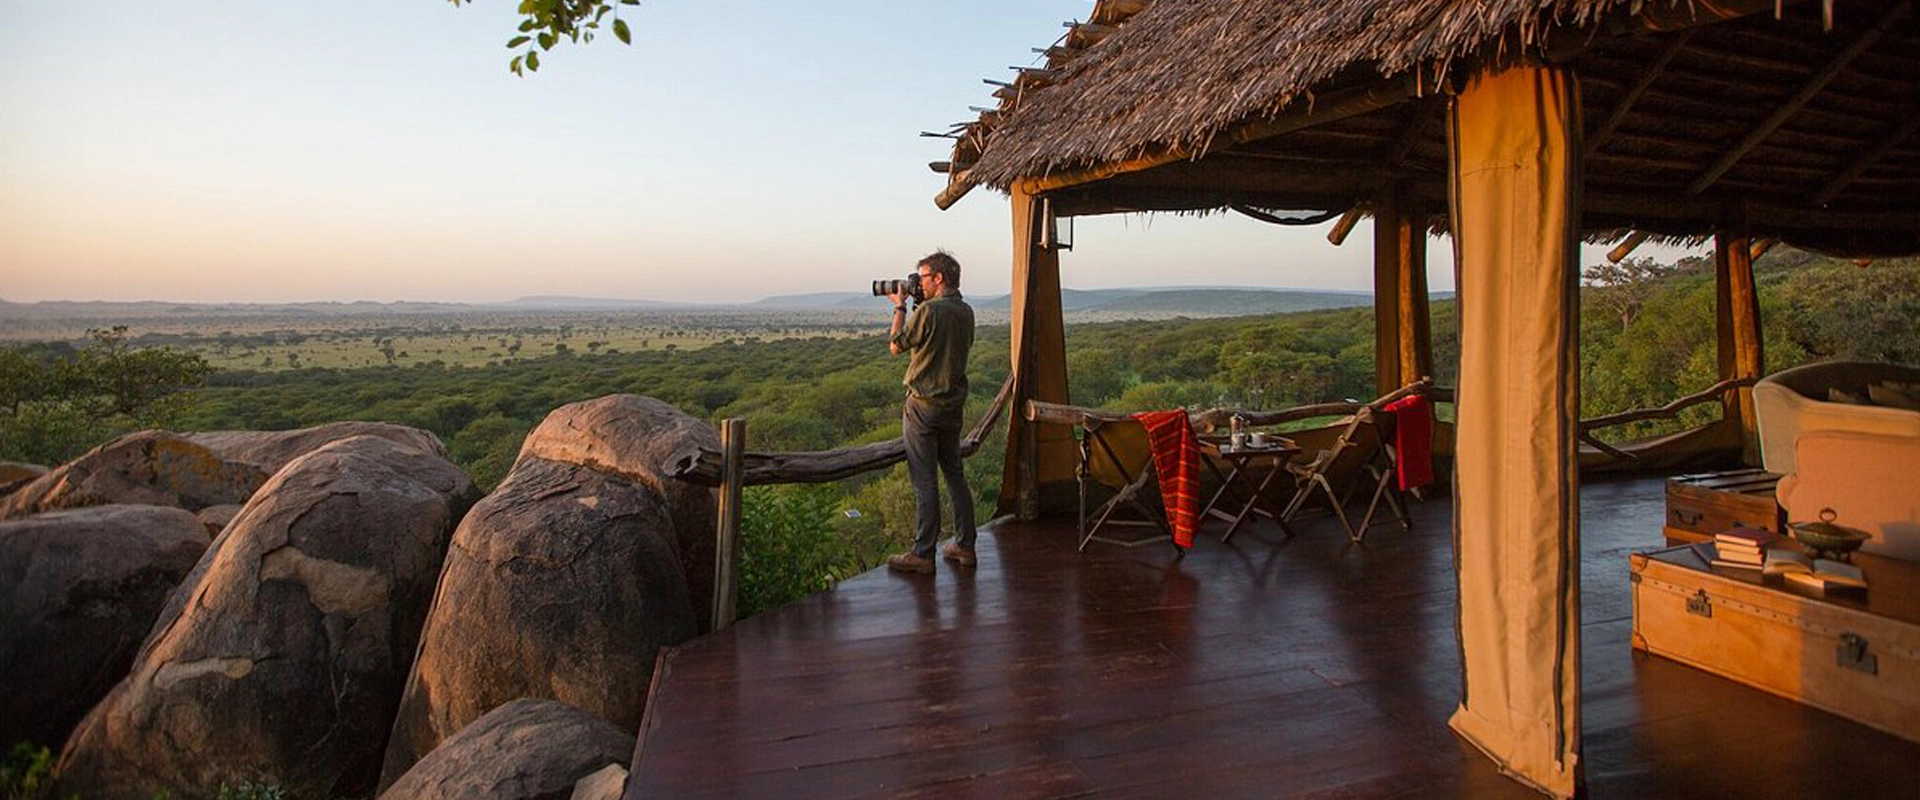 safari luxe tanzanie serengeti